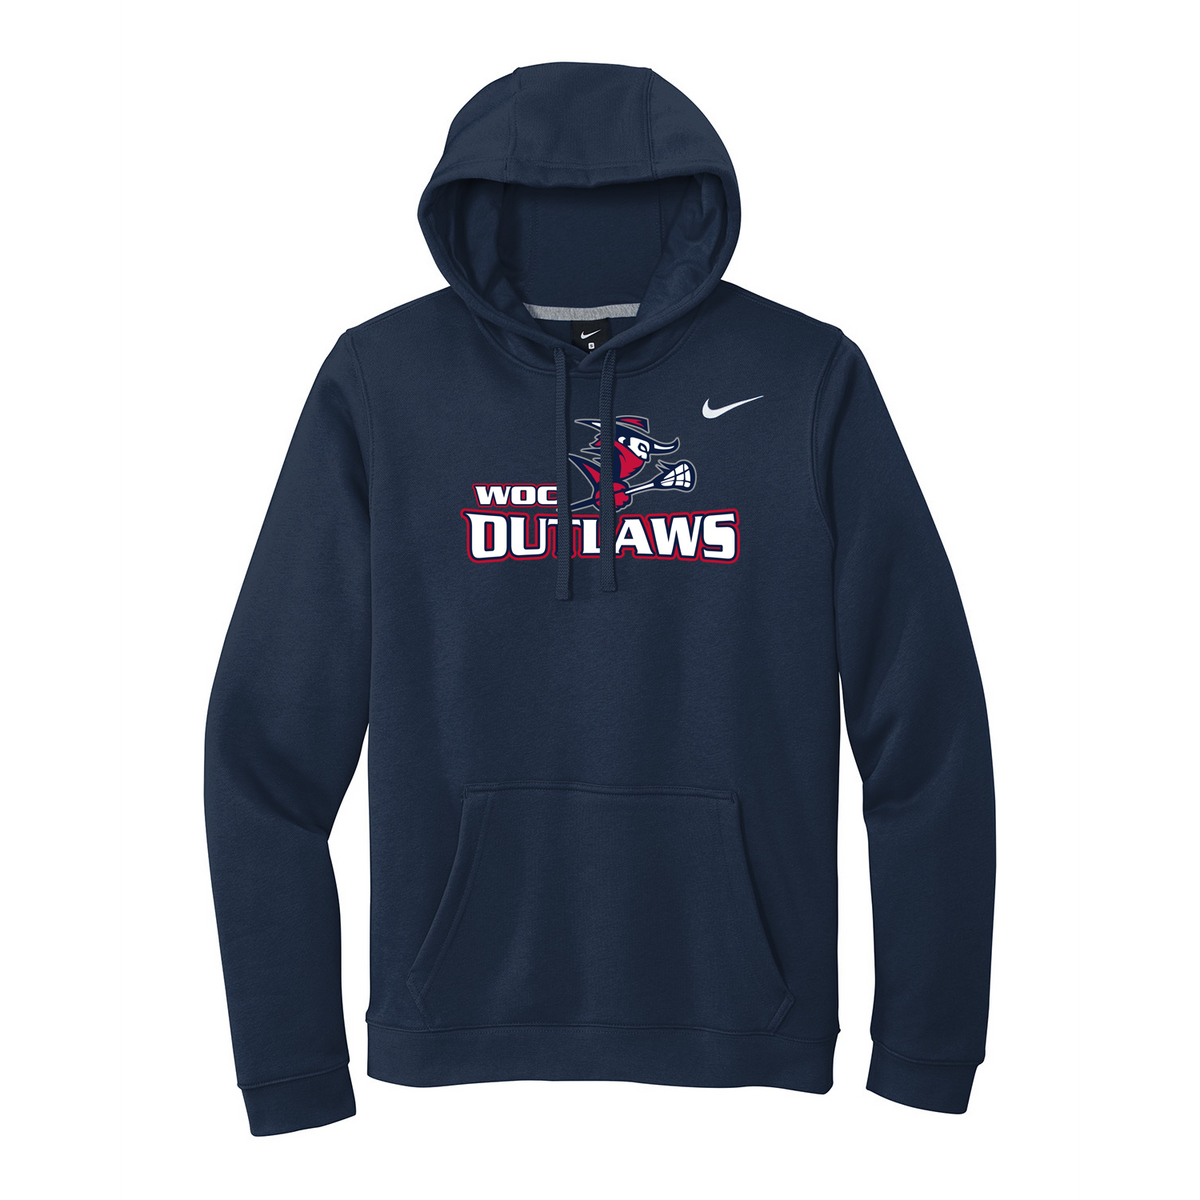 WOC Outlaws Lacrosse Club Nike Fleece Sweatshirt